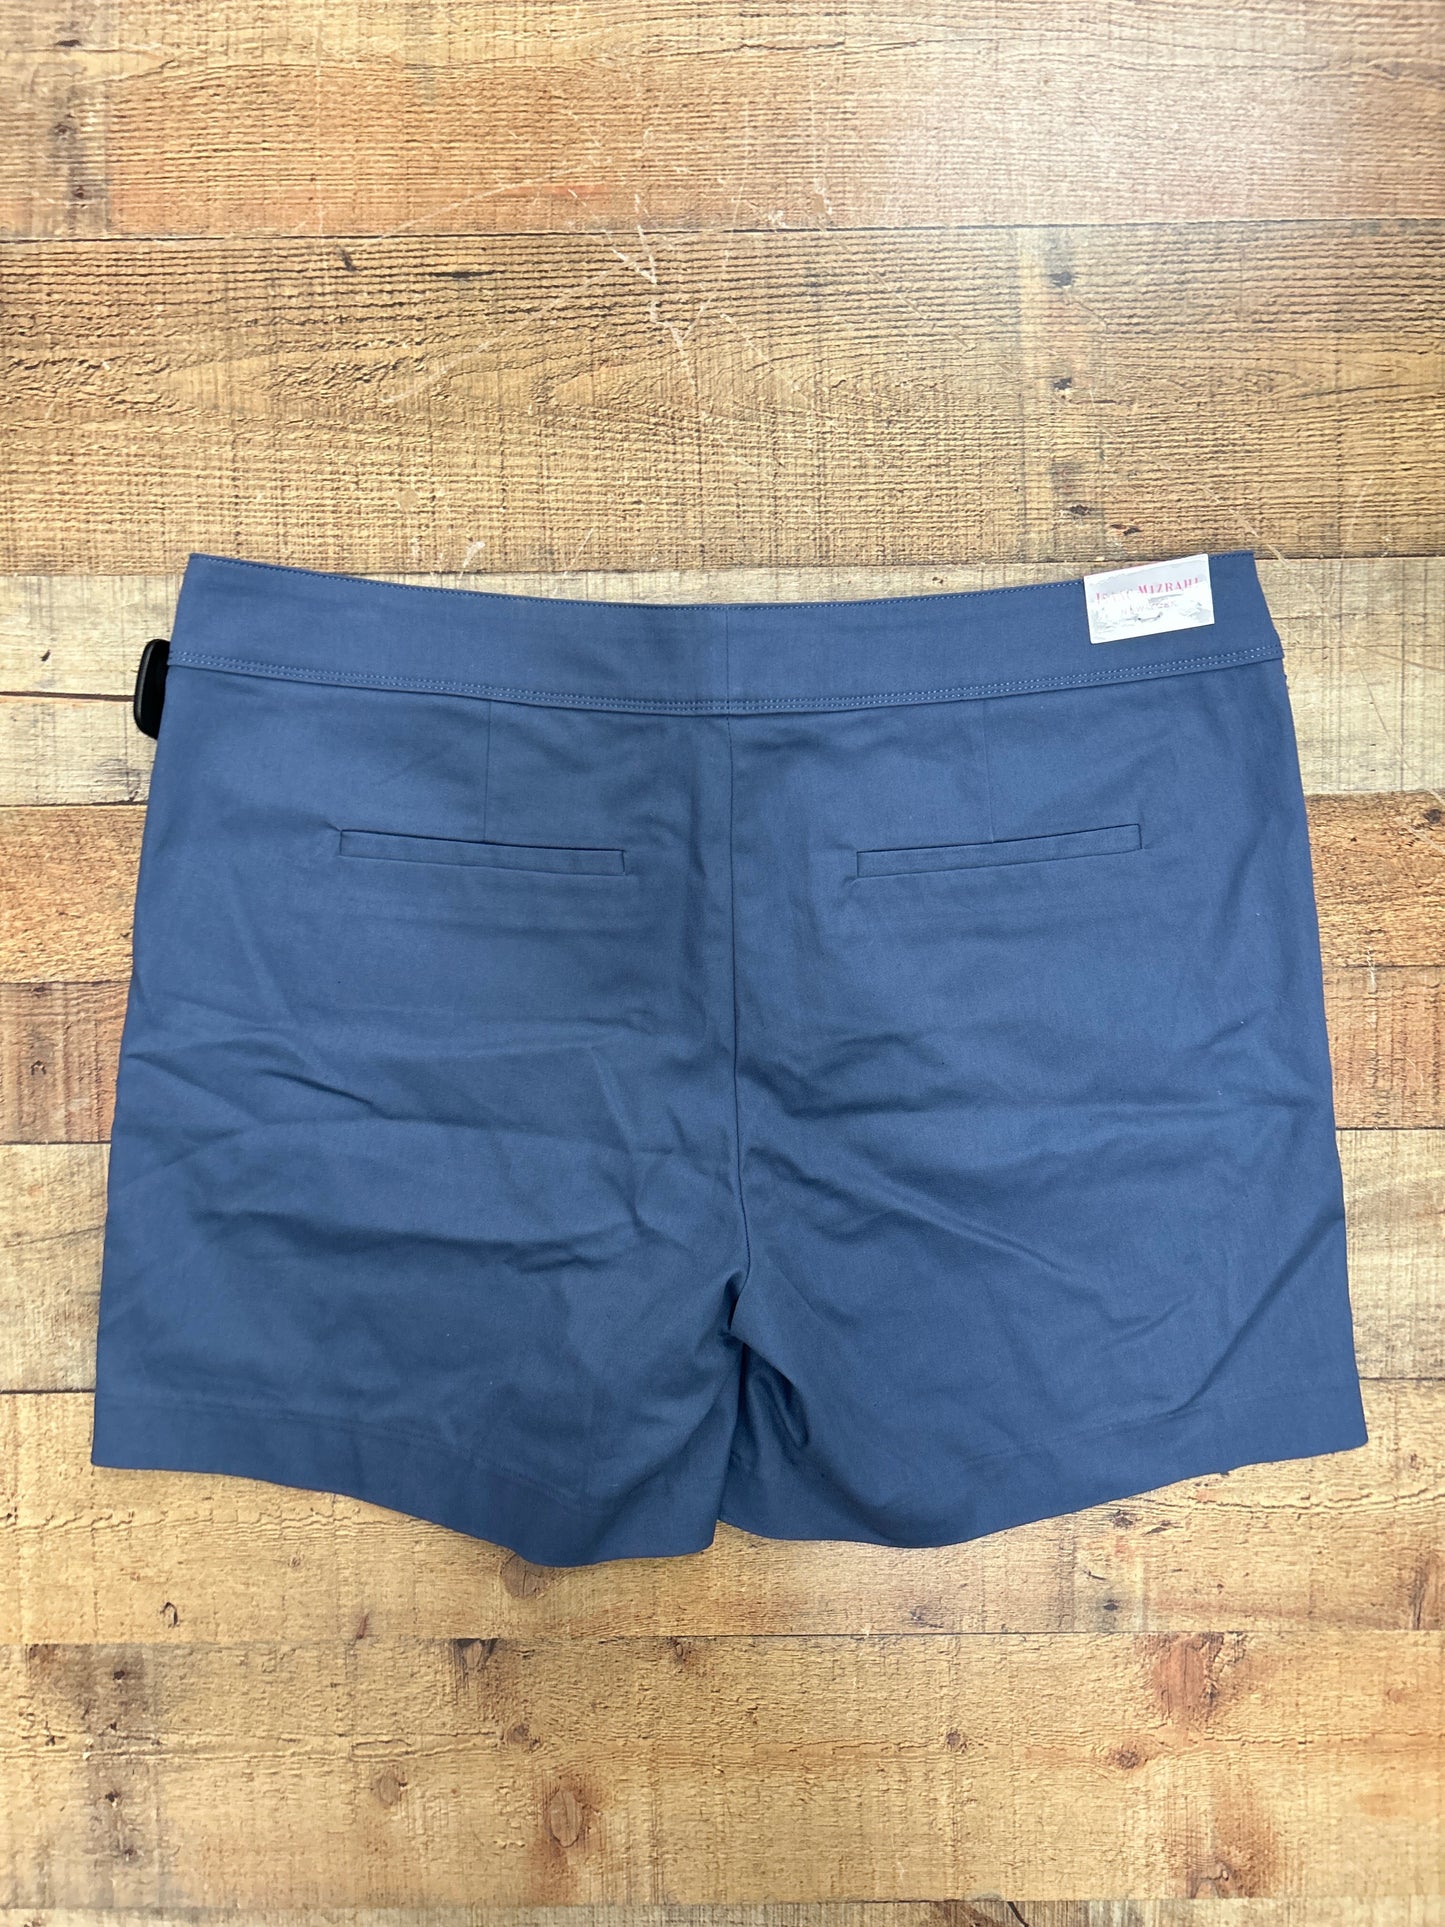 Shorts By Isaac Mizrahi Target  Size: 16